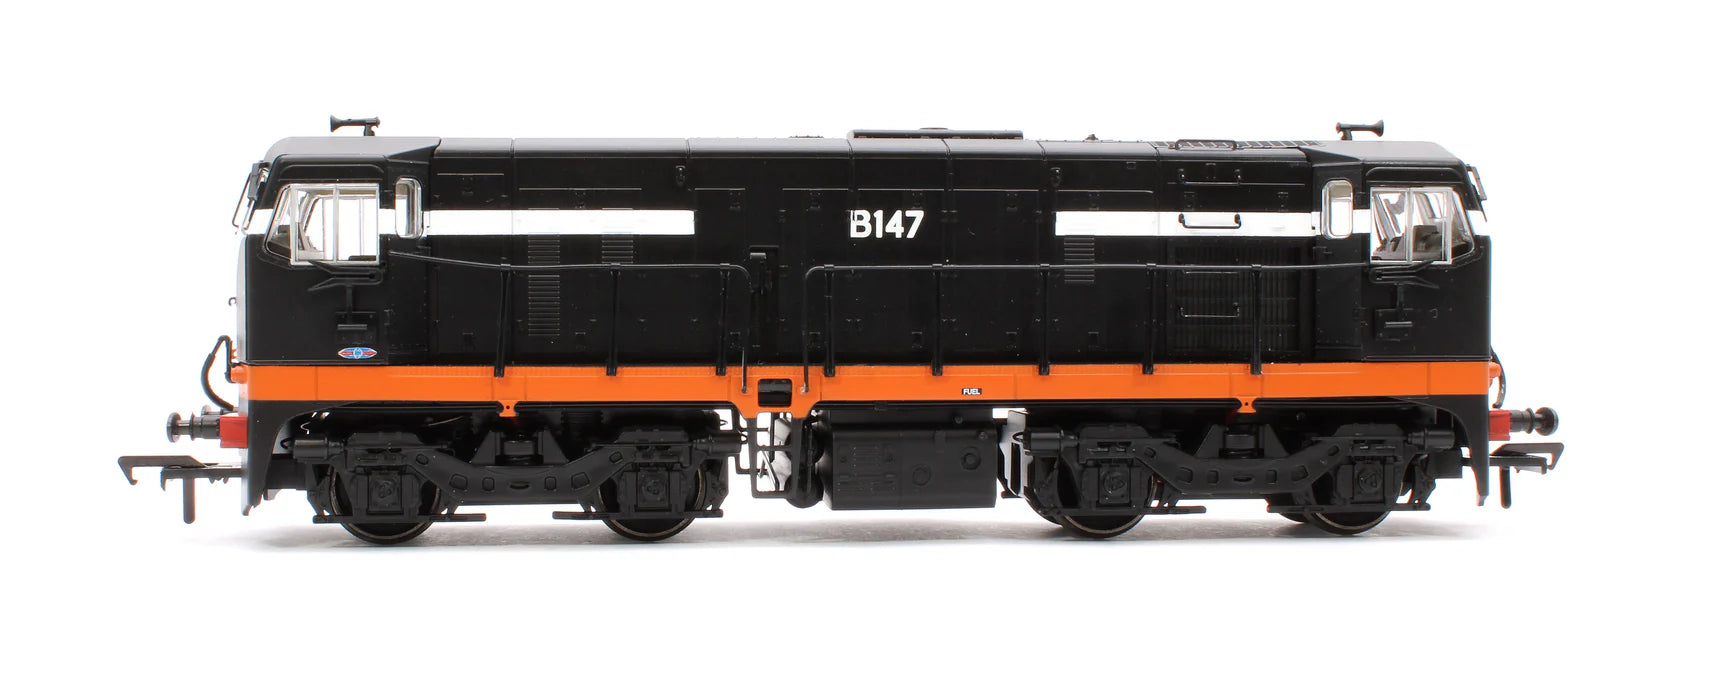 147 - Class 141 - CIE Black and Tan